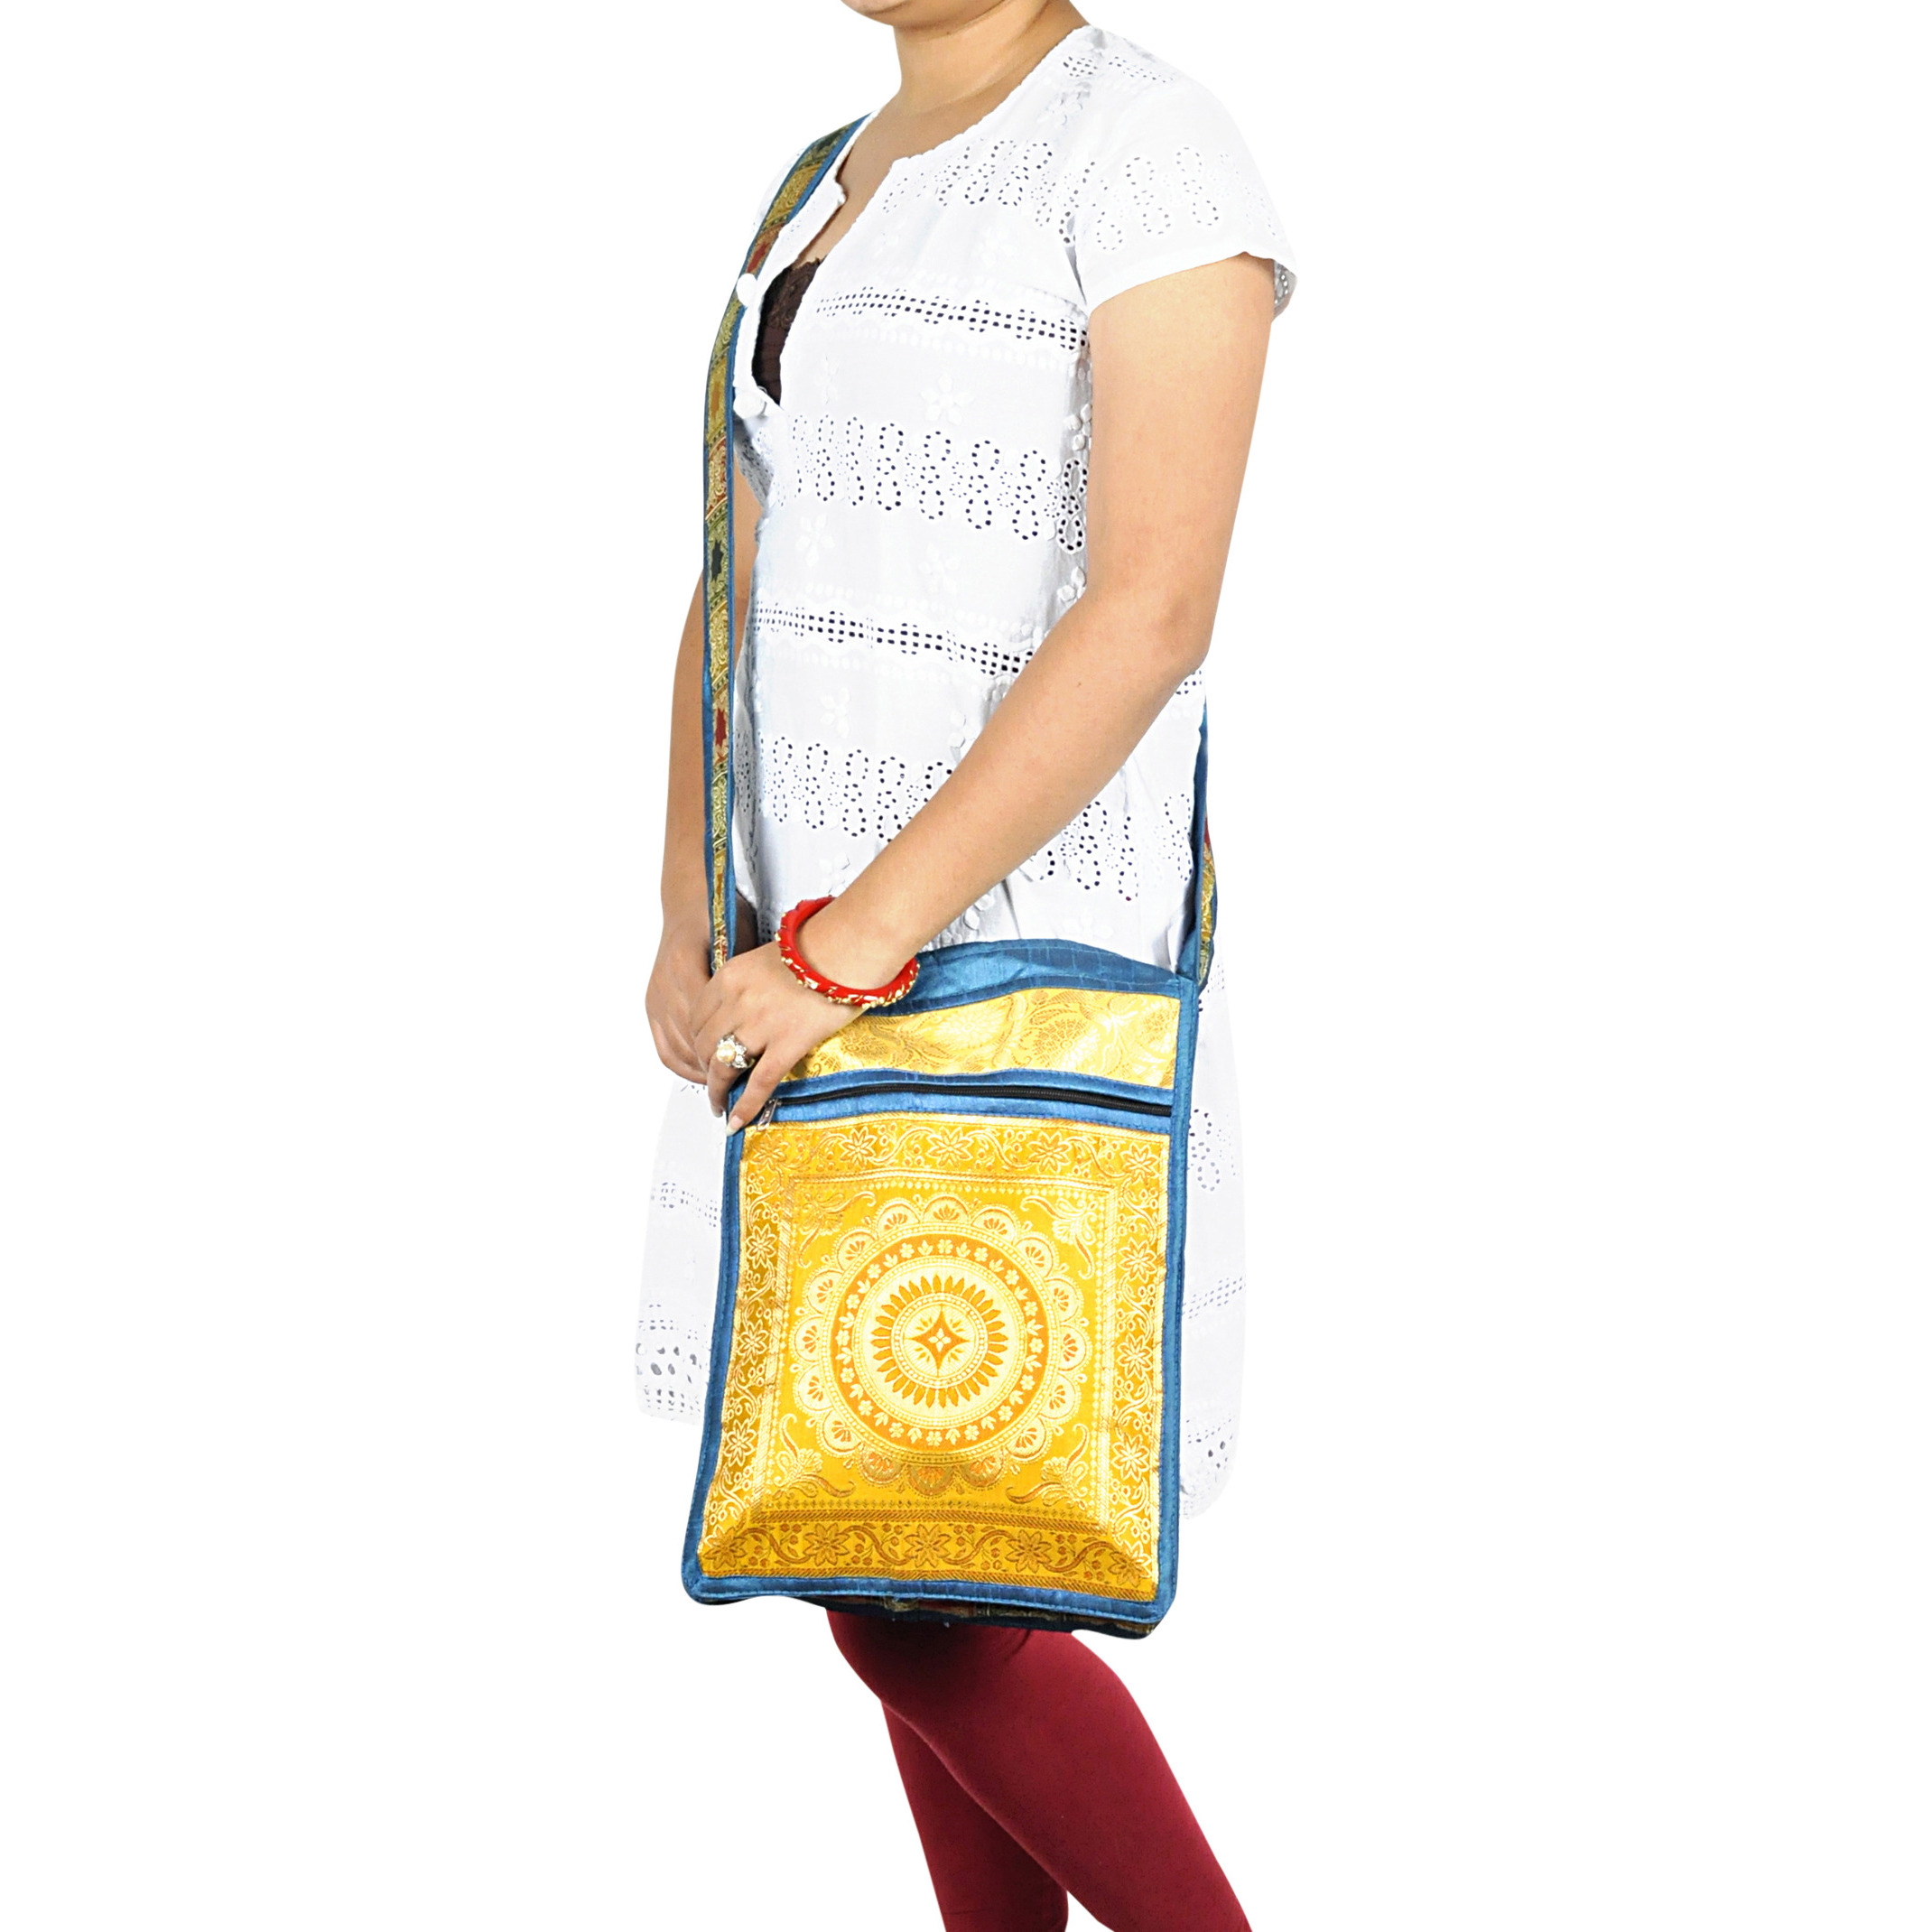 Exclusive Women's Handbag Hot Fashion Shoulder Boho Purse Cross Body Bag